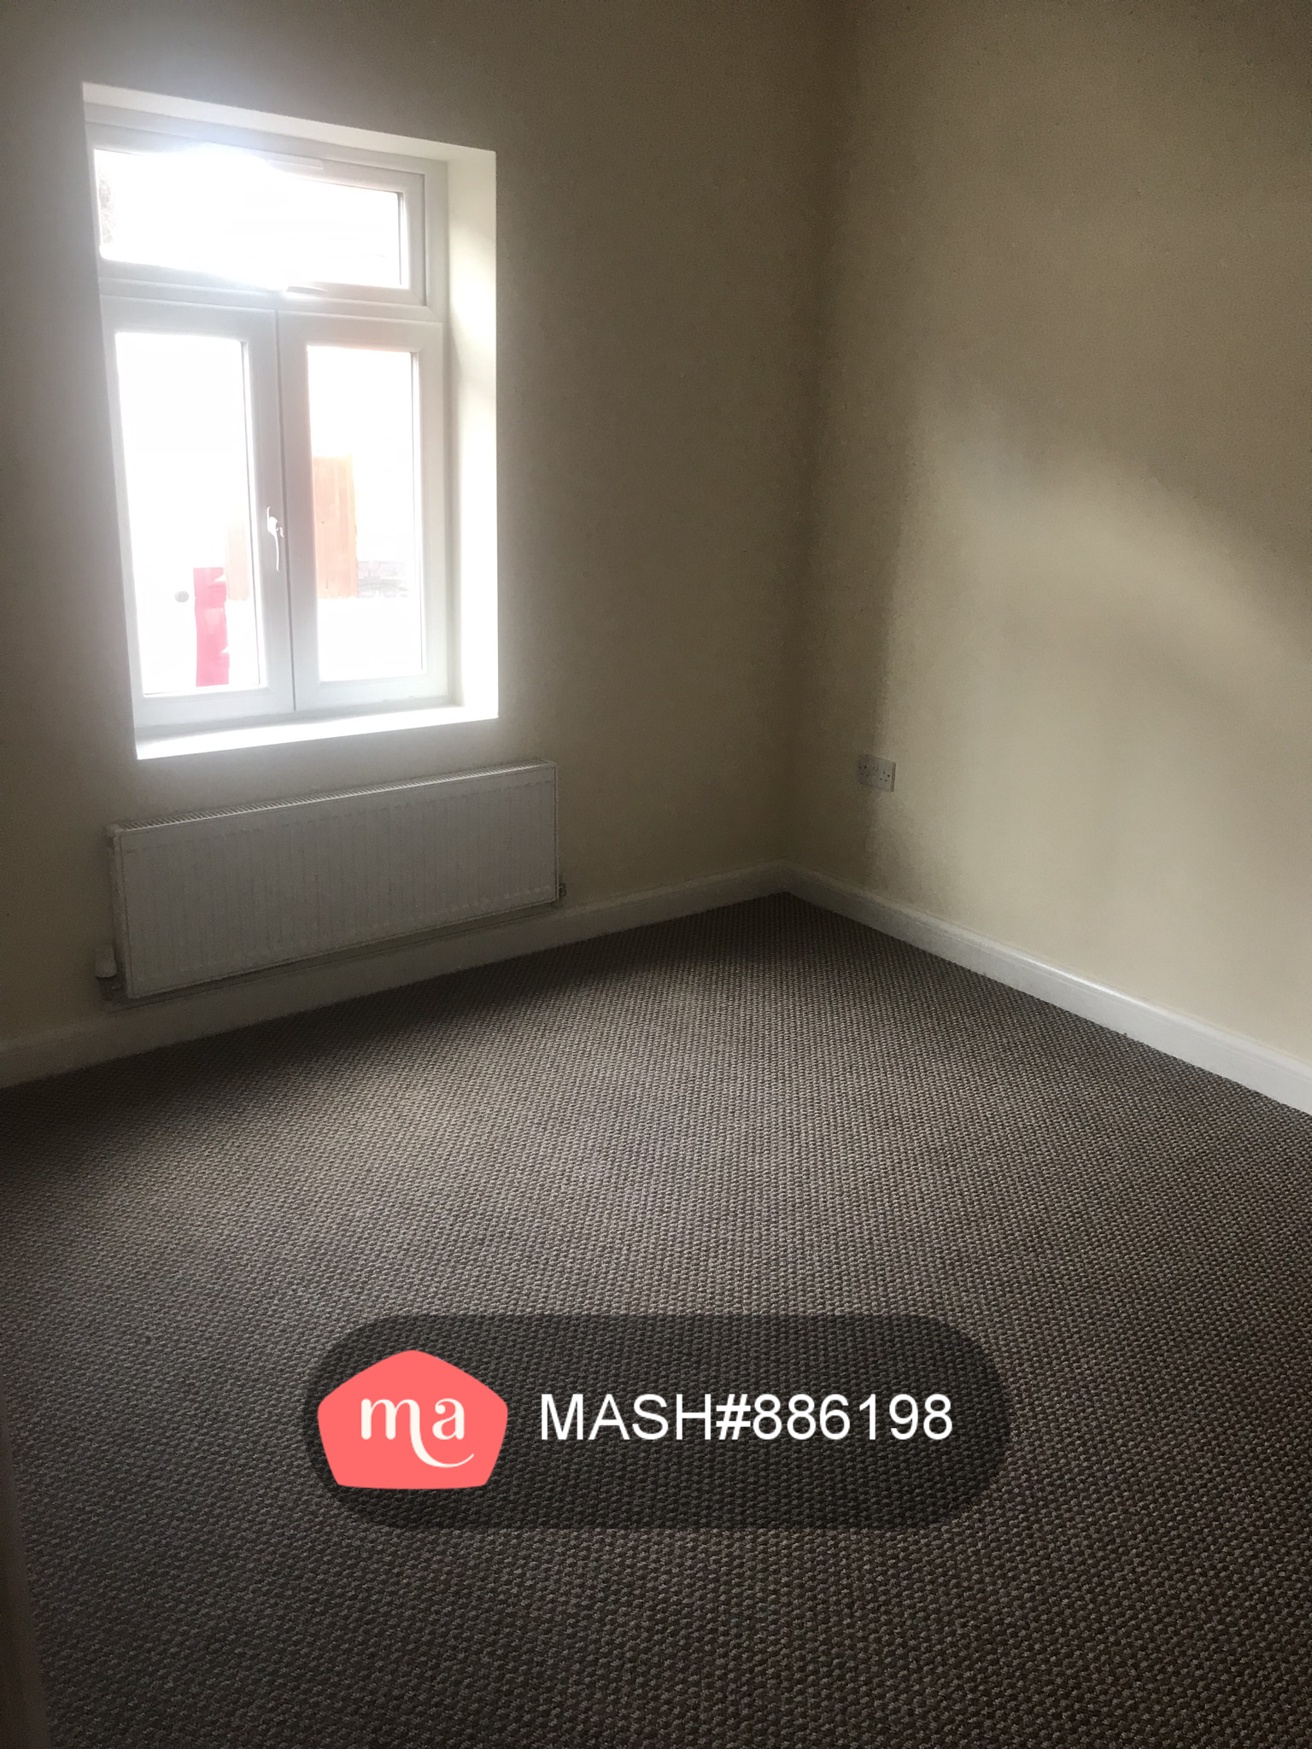 2 Bedroom Flat to rent in Derby - Mashroom